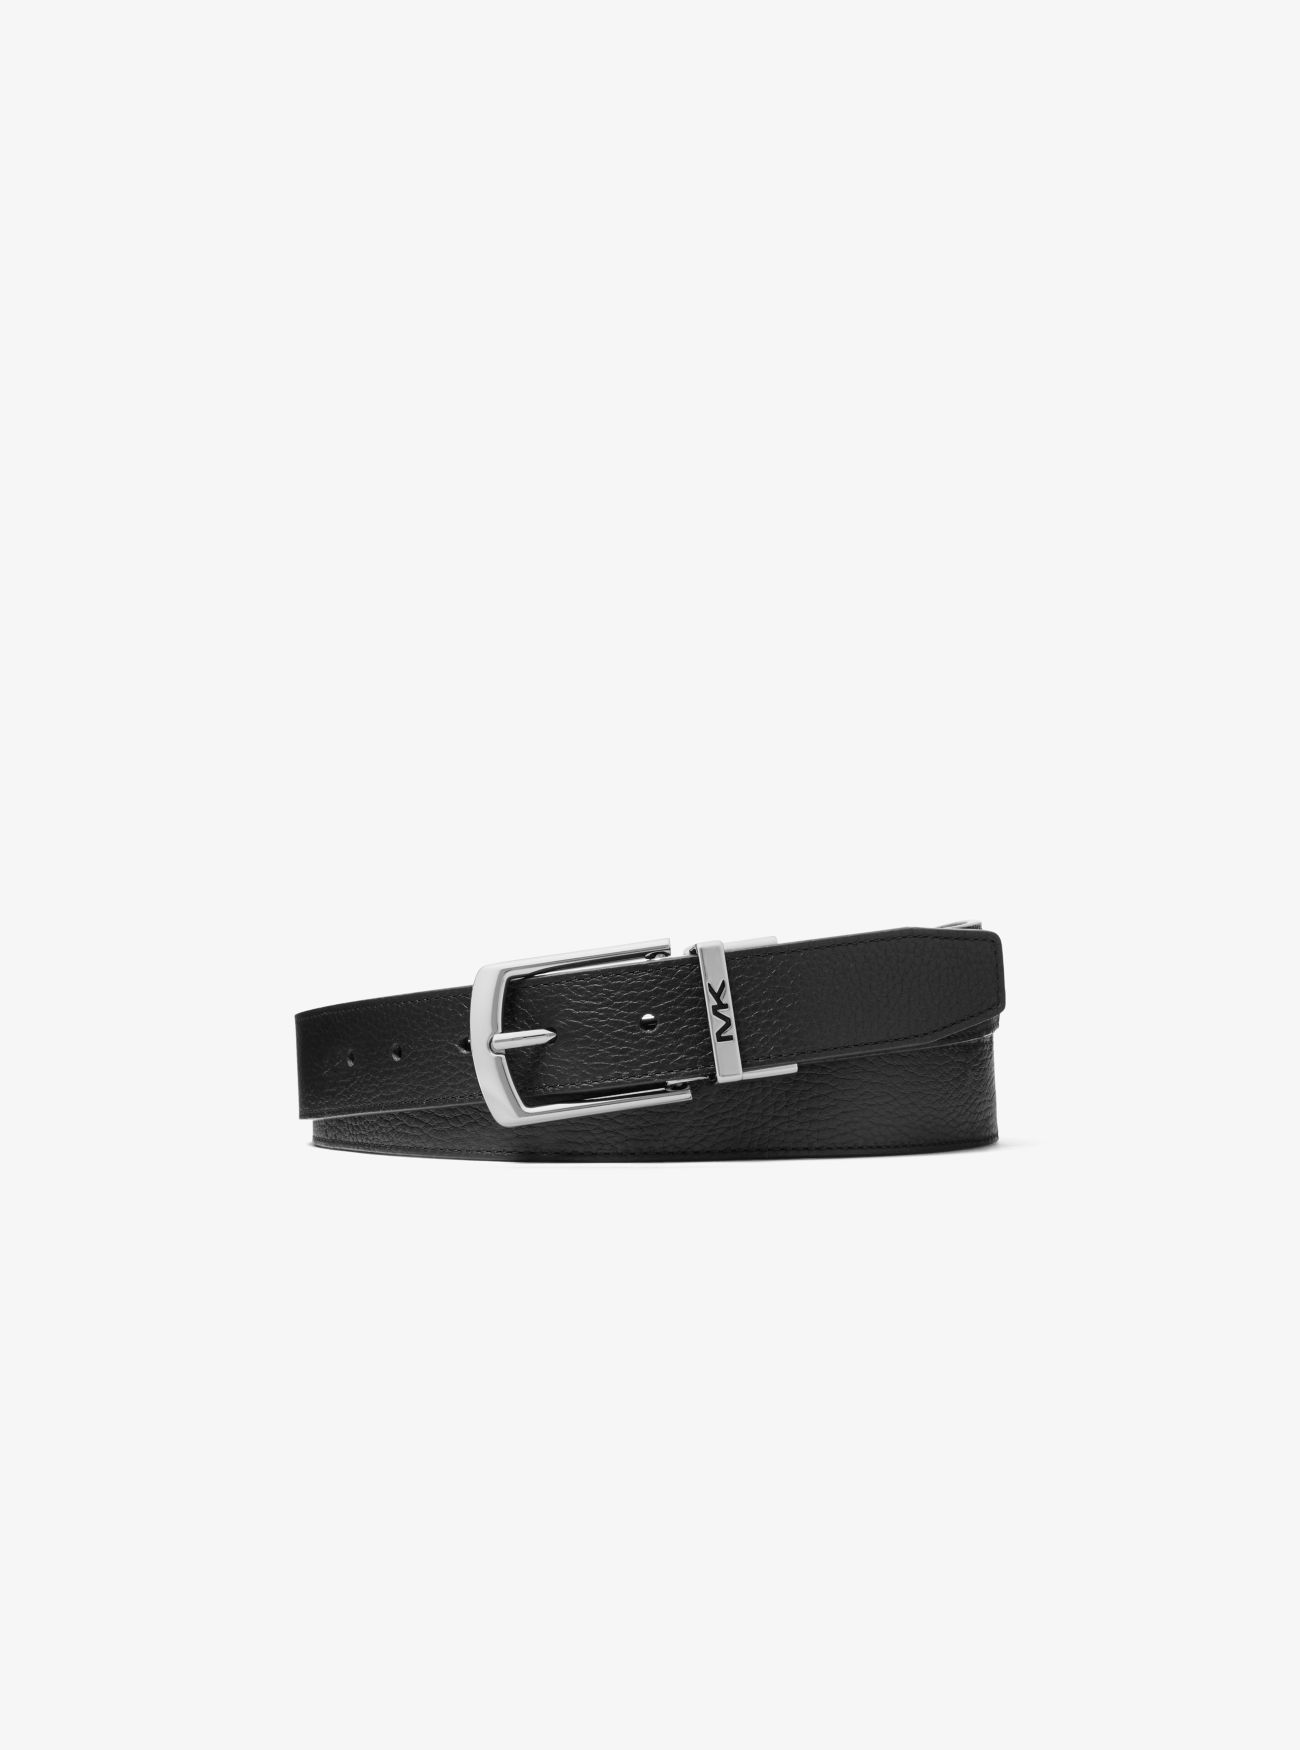 MK Reversible Pebbled Leather Belt - Black - Michael Kors